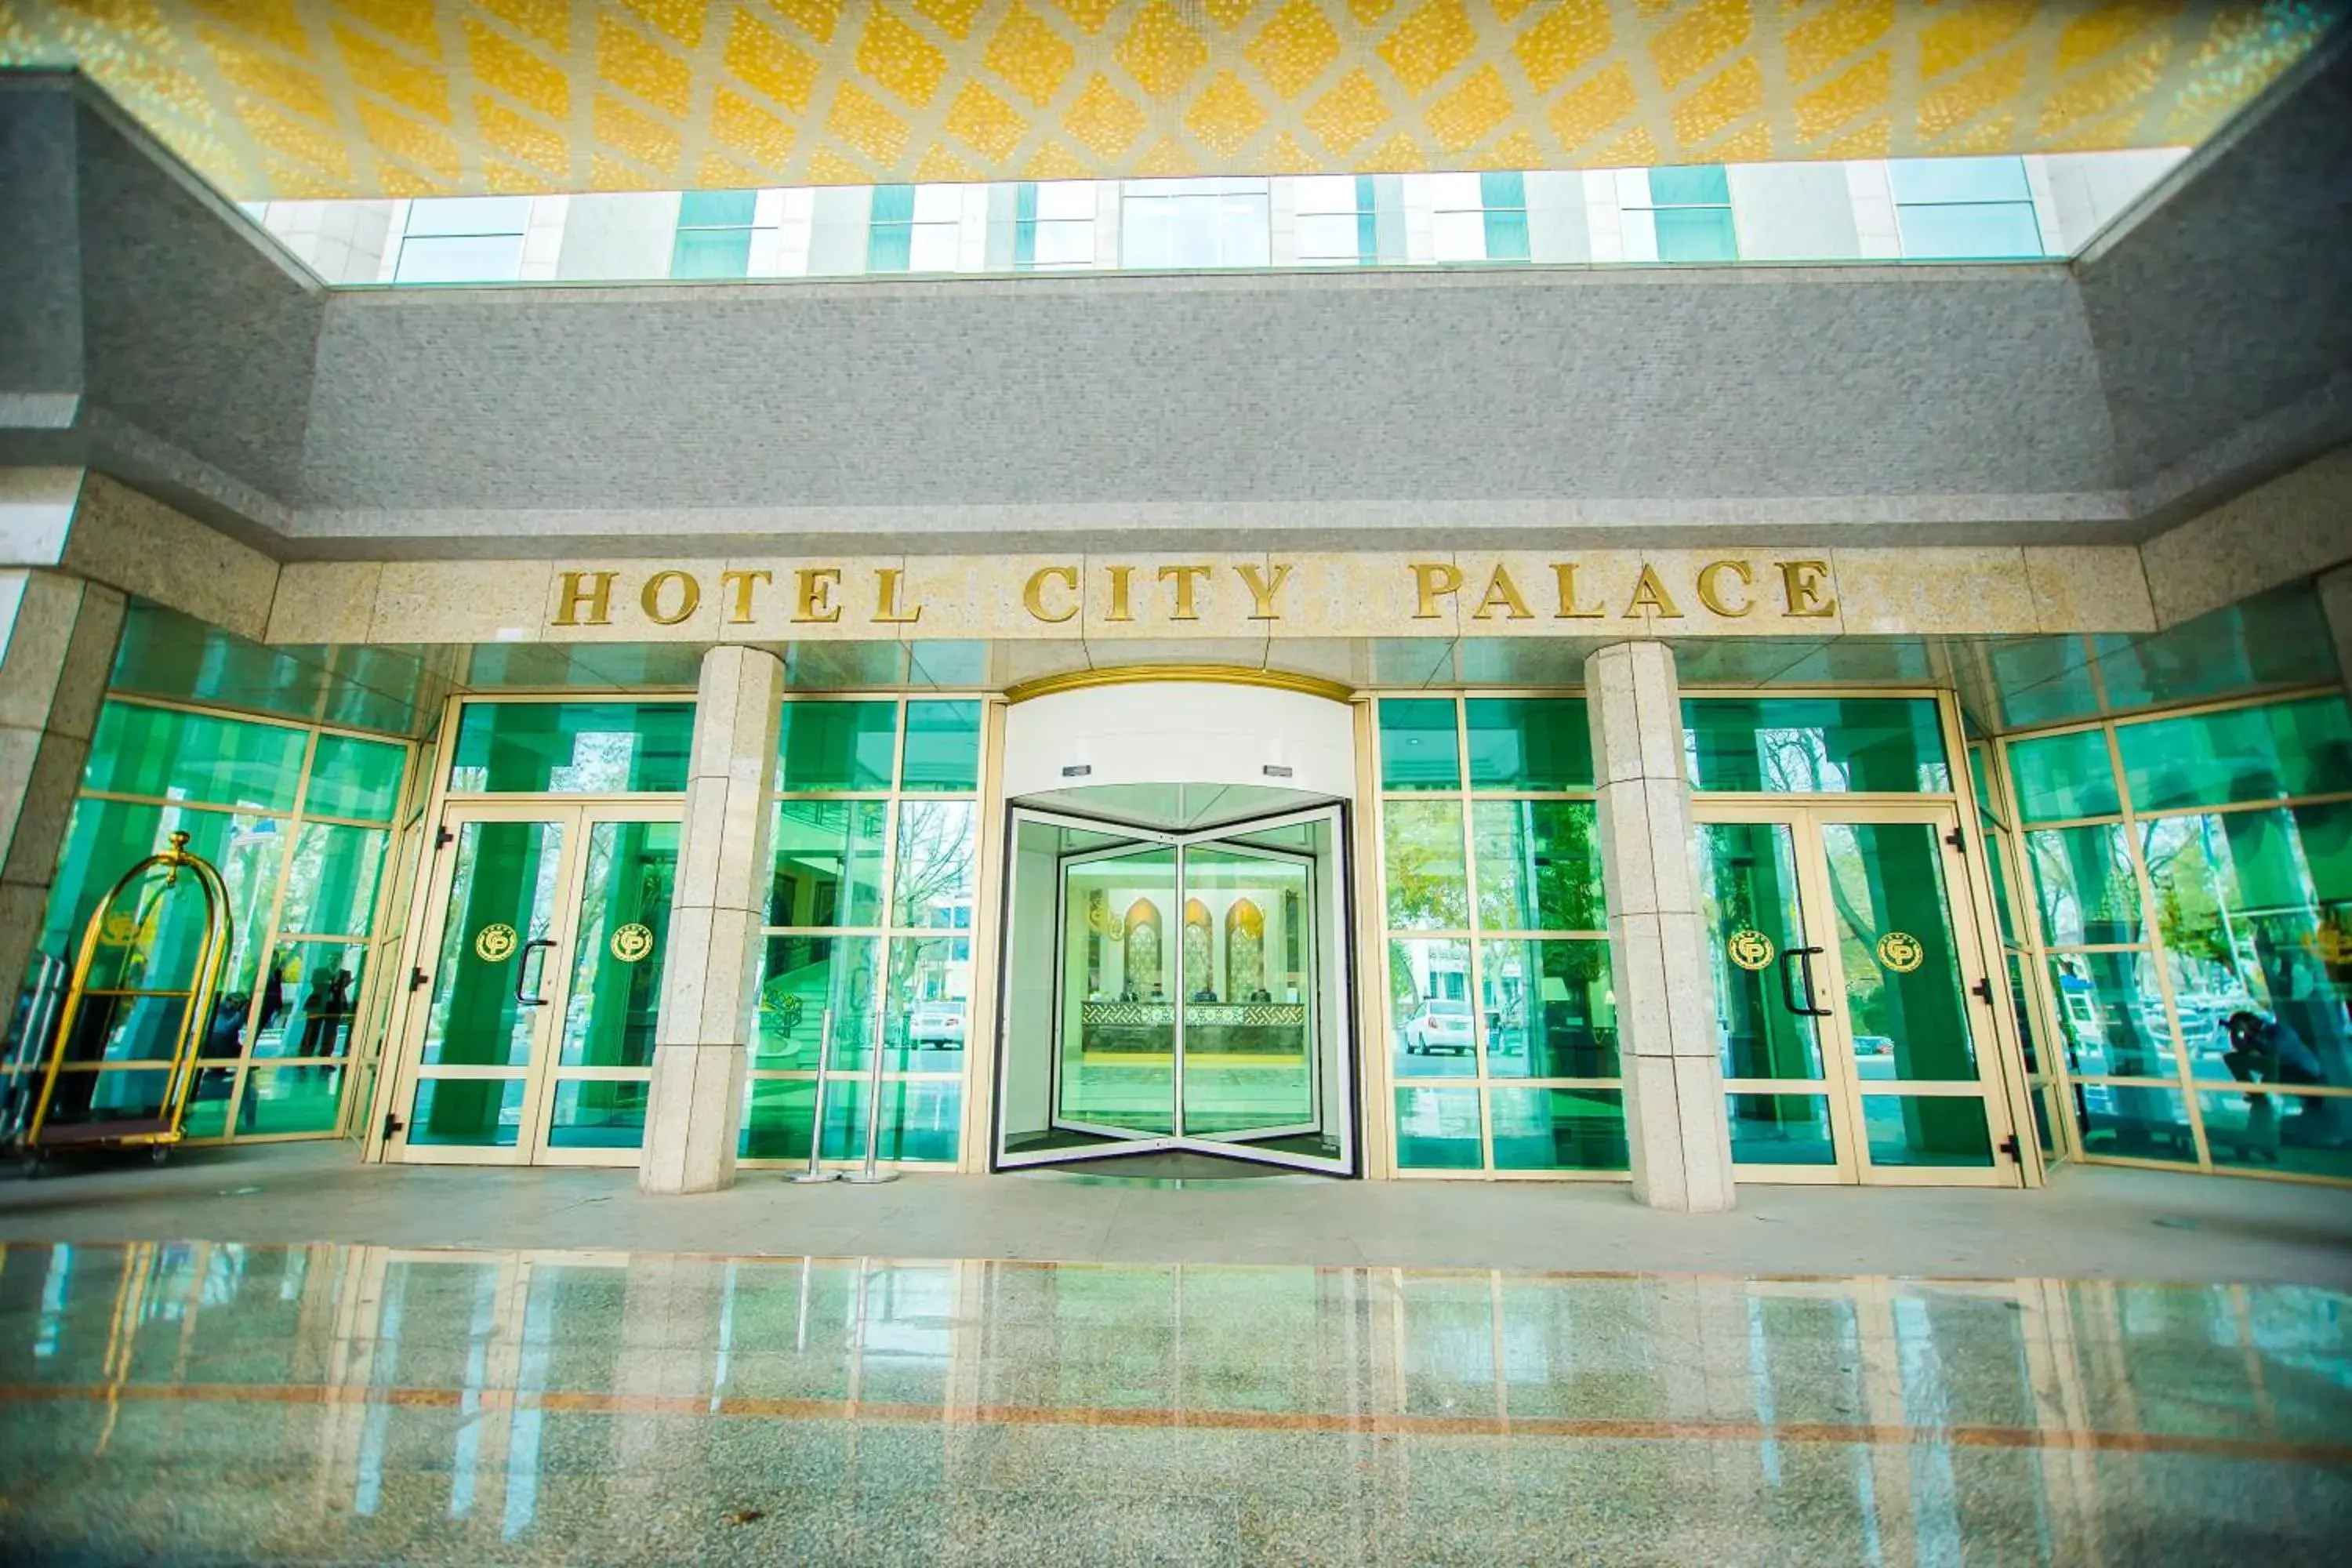 Facade/entrance in City Palace Hotel